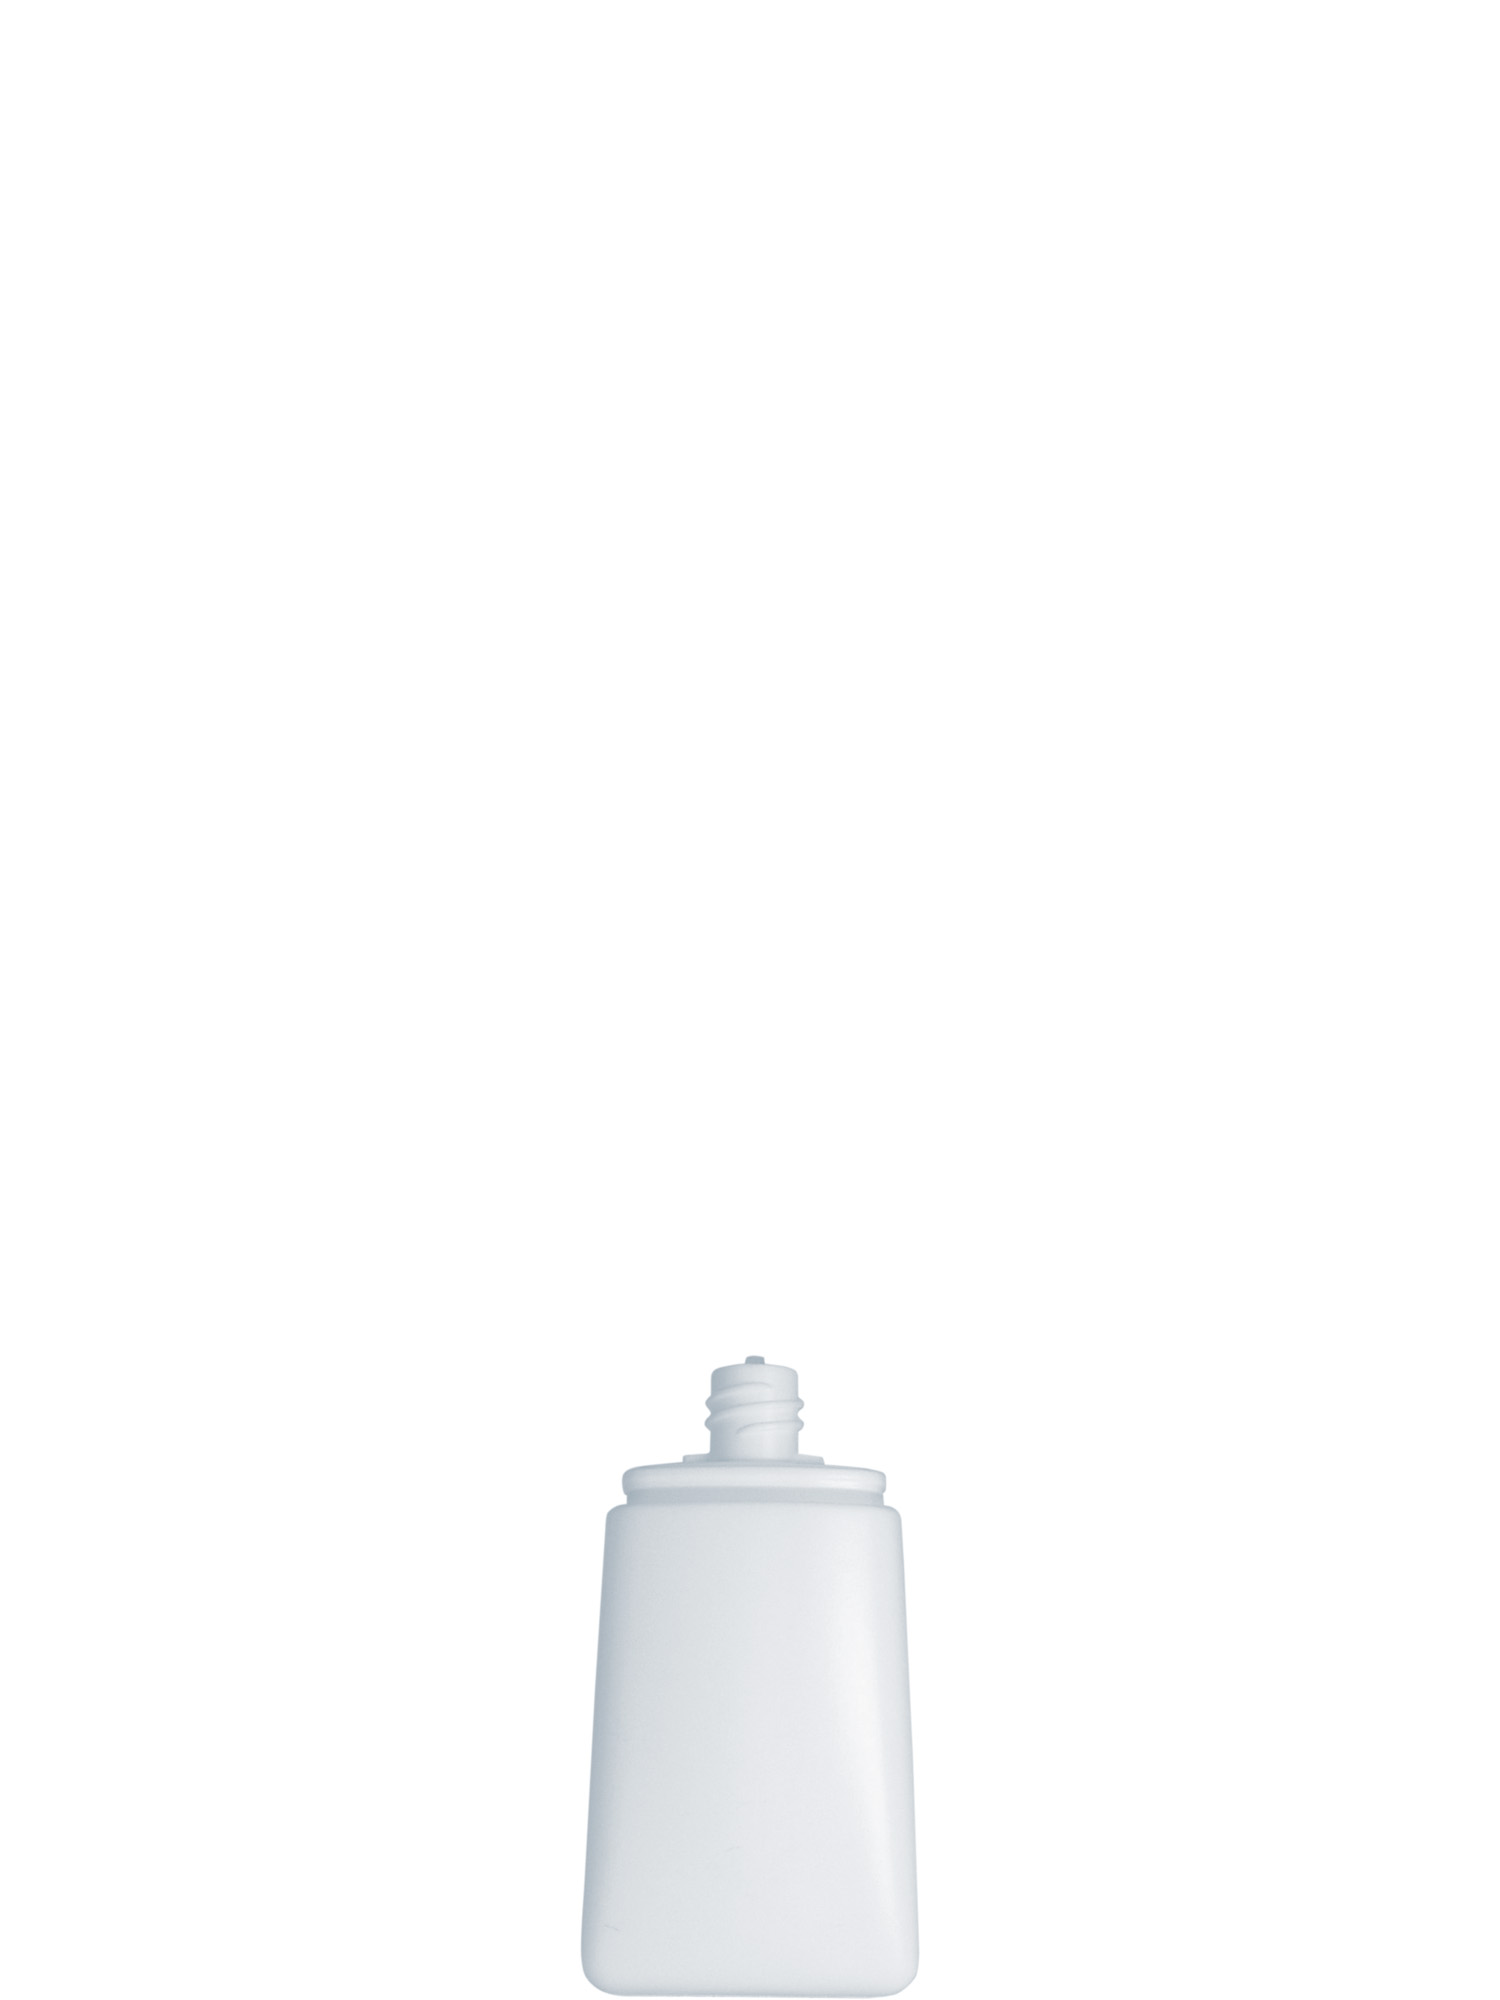 Trapezoidal bottle 30 ml PP, neck special, style FLACONSPUGNA